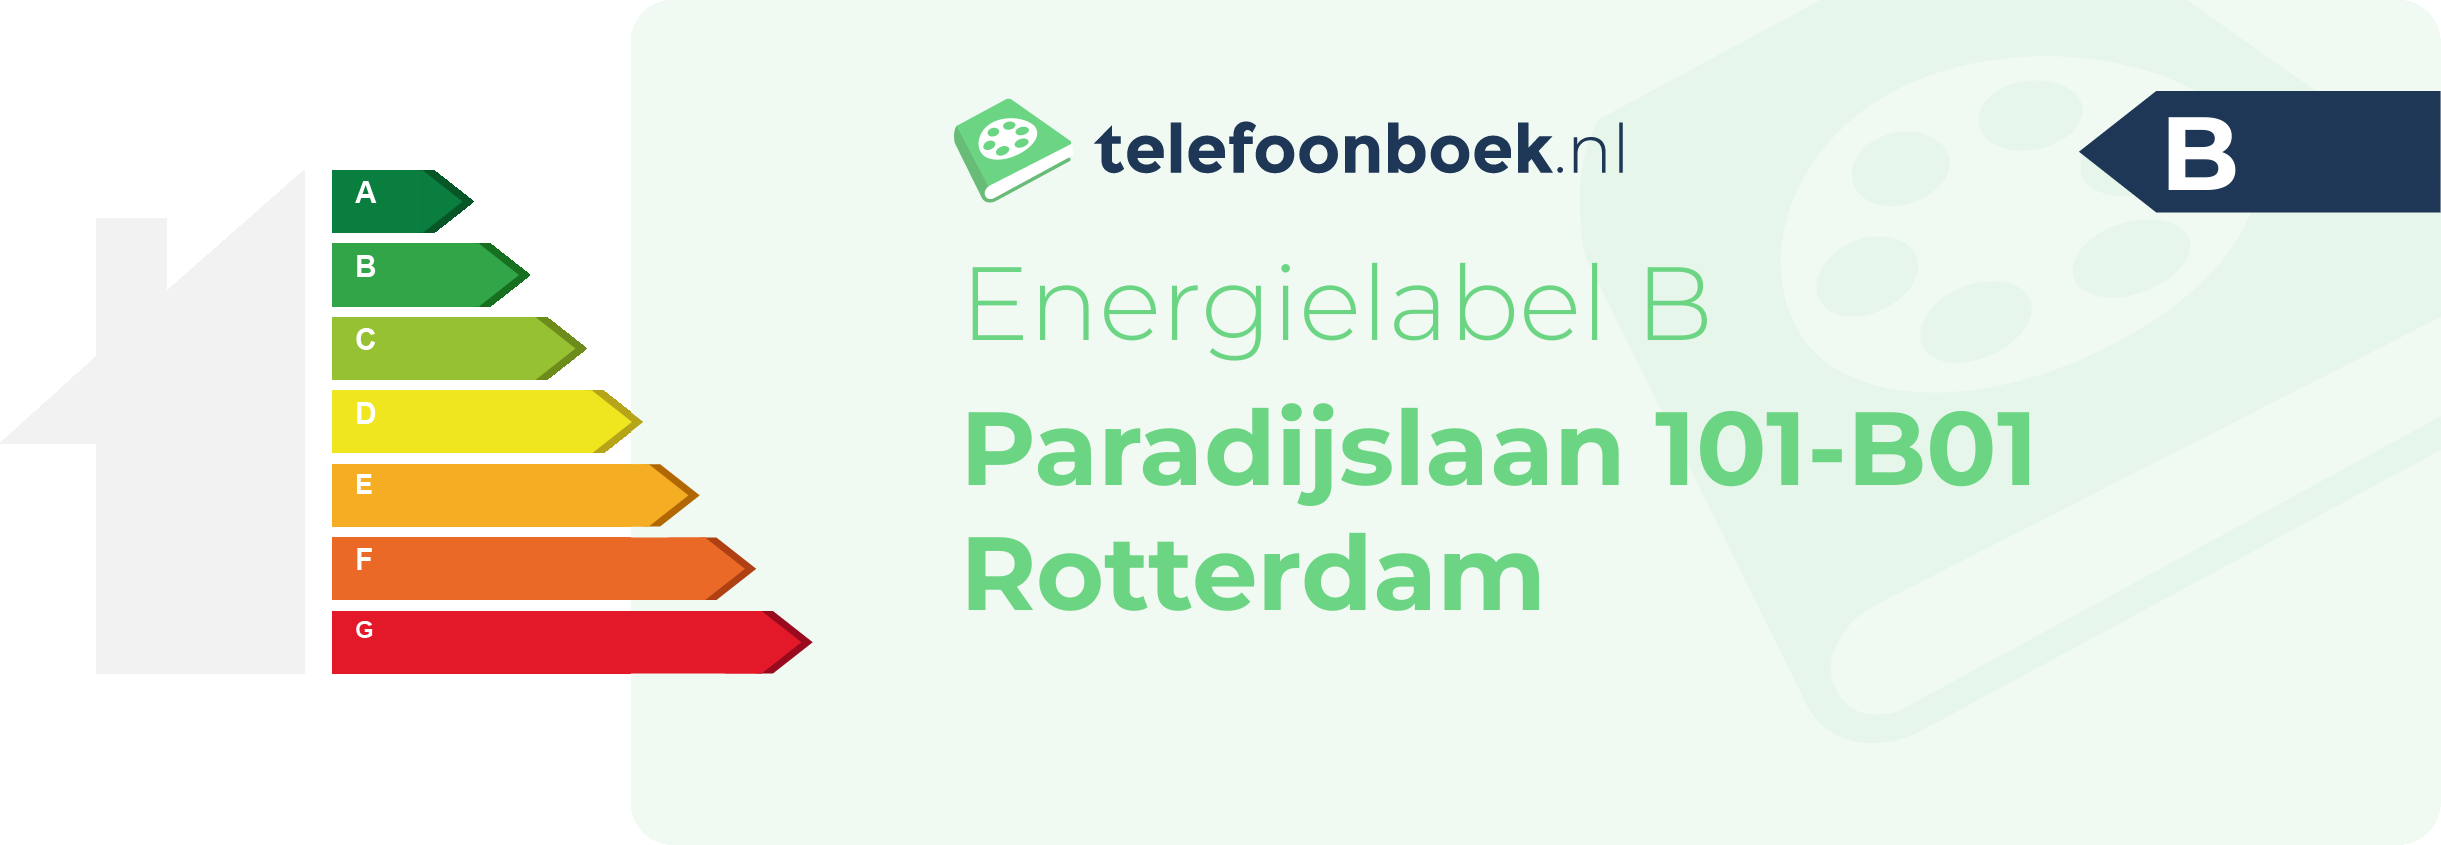 Energielabel Paradijslaan 101-B01 Rotterdam